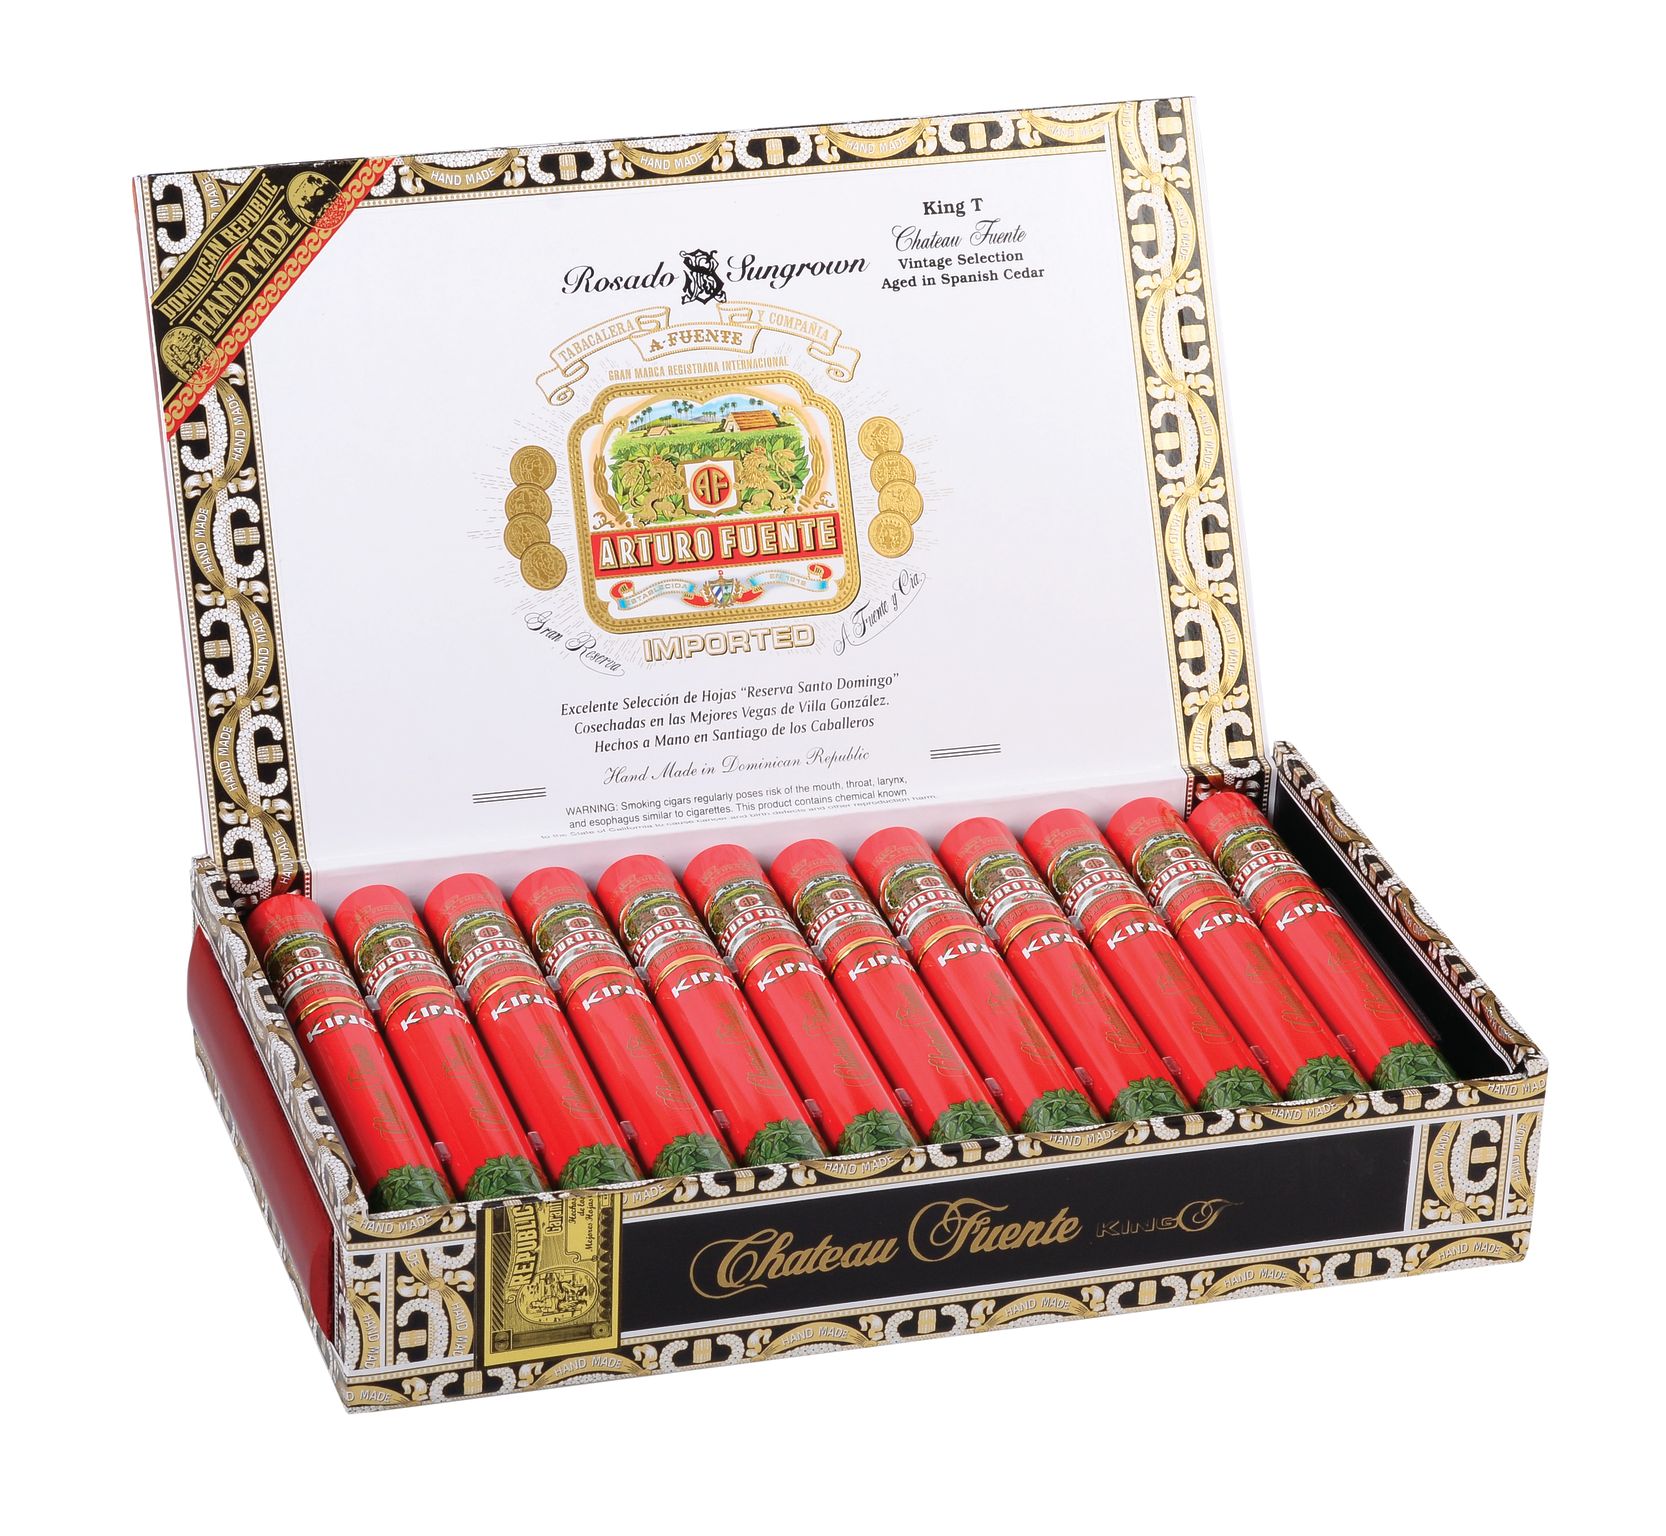 Open box of 24 count Arturo Fuente Chateau King T Rosado cigars